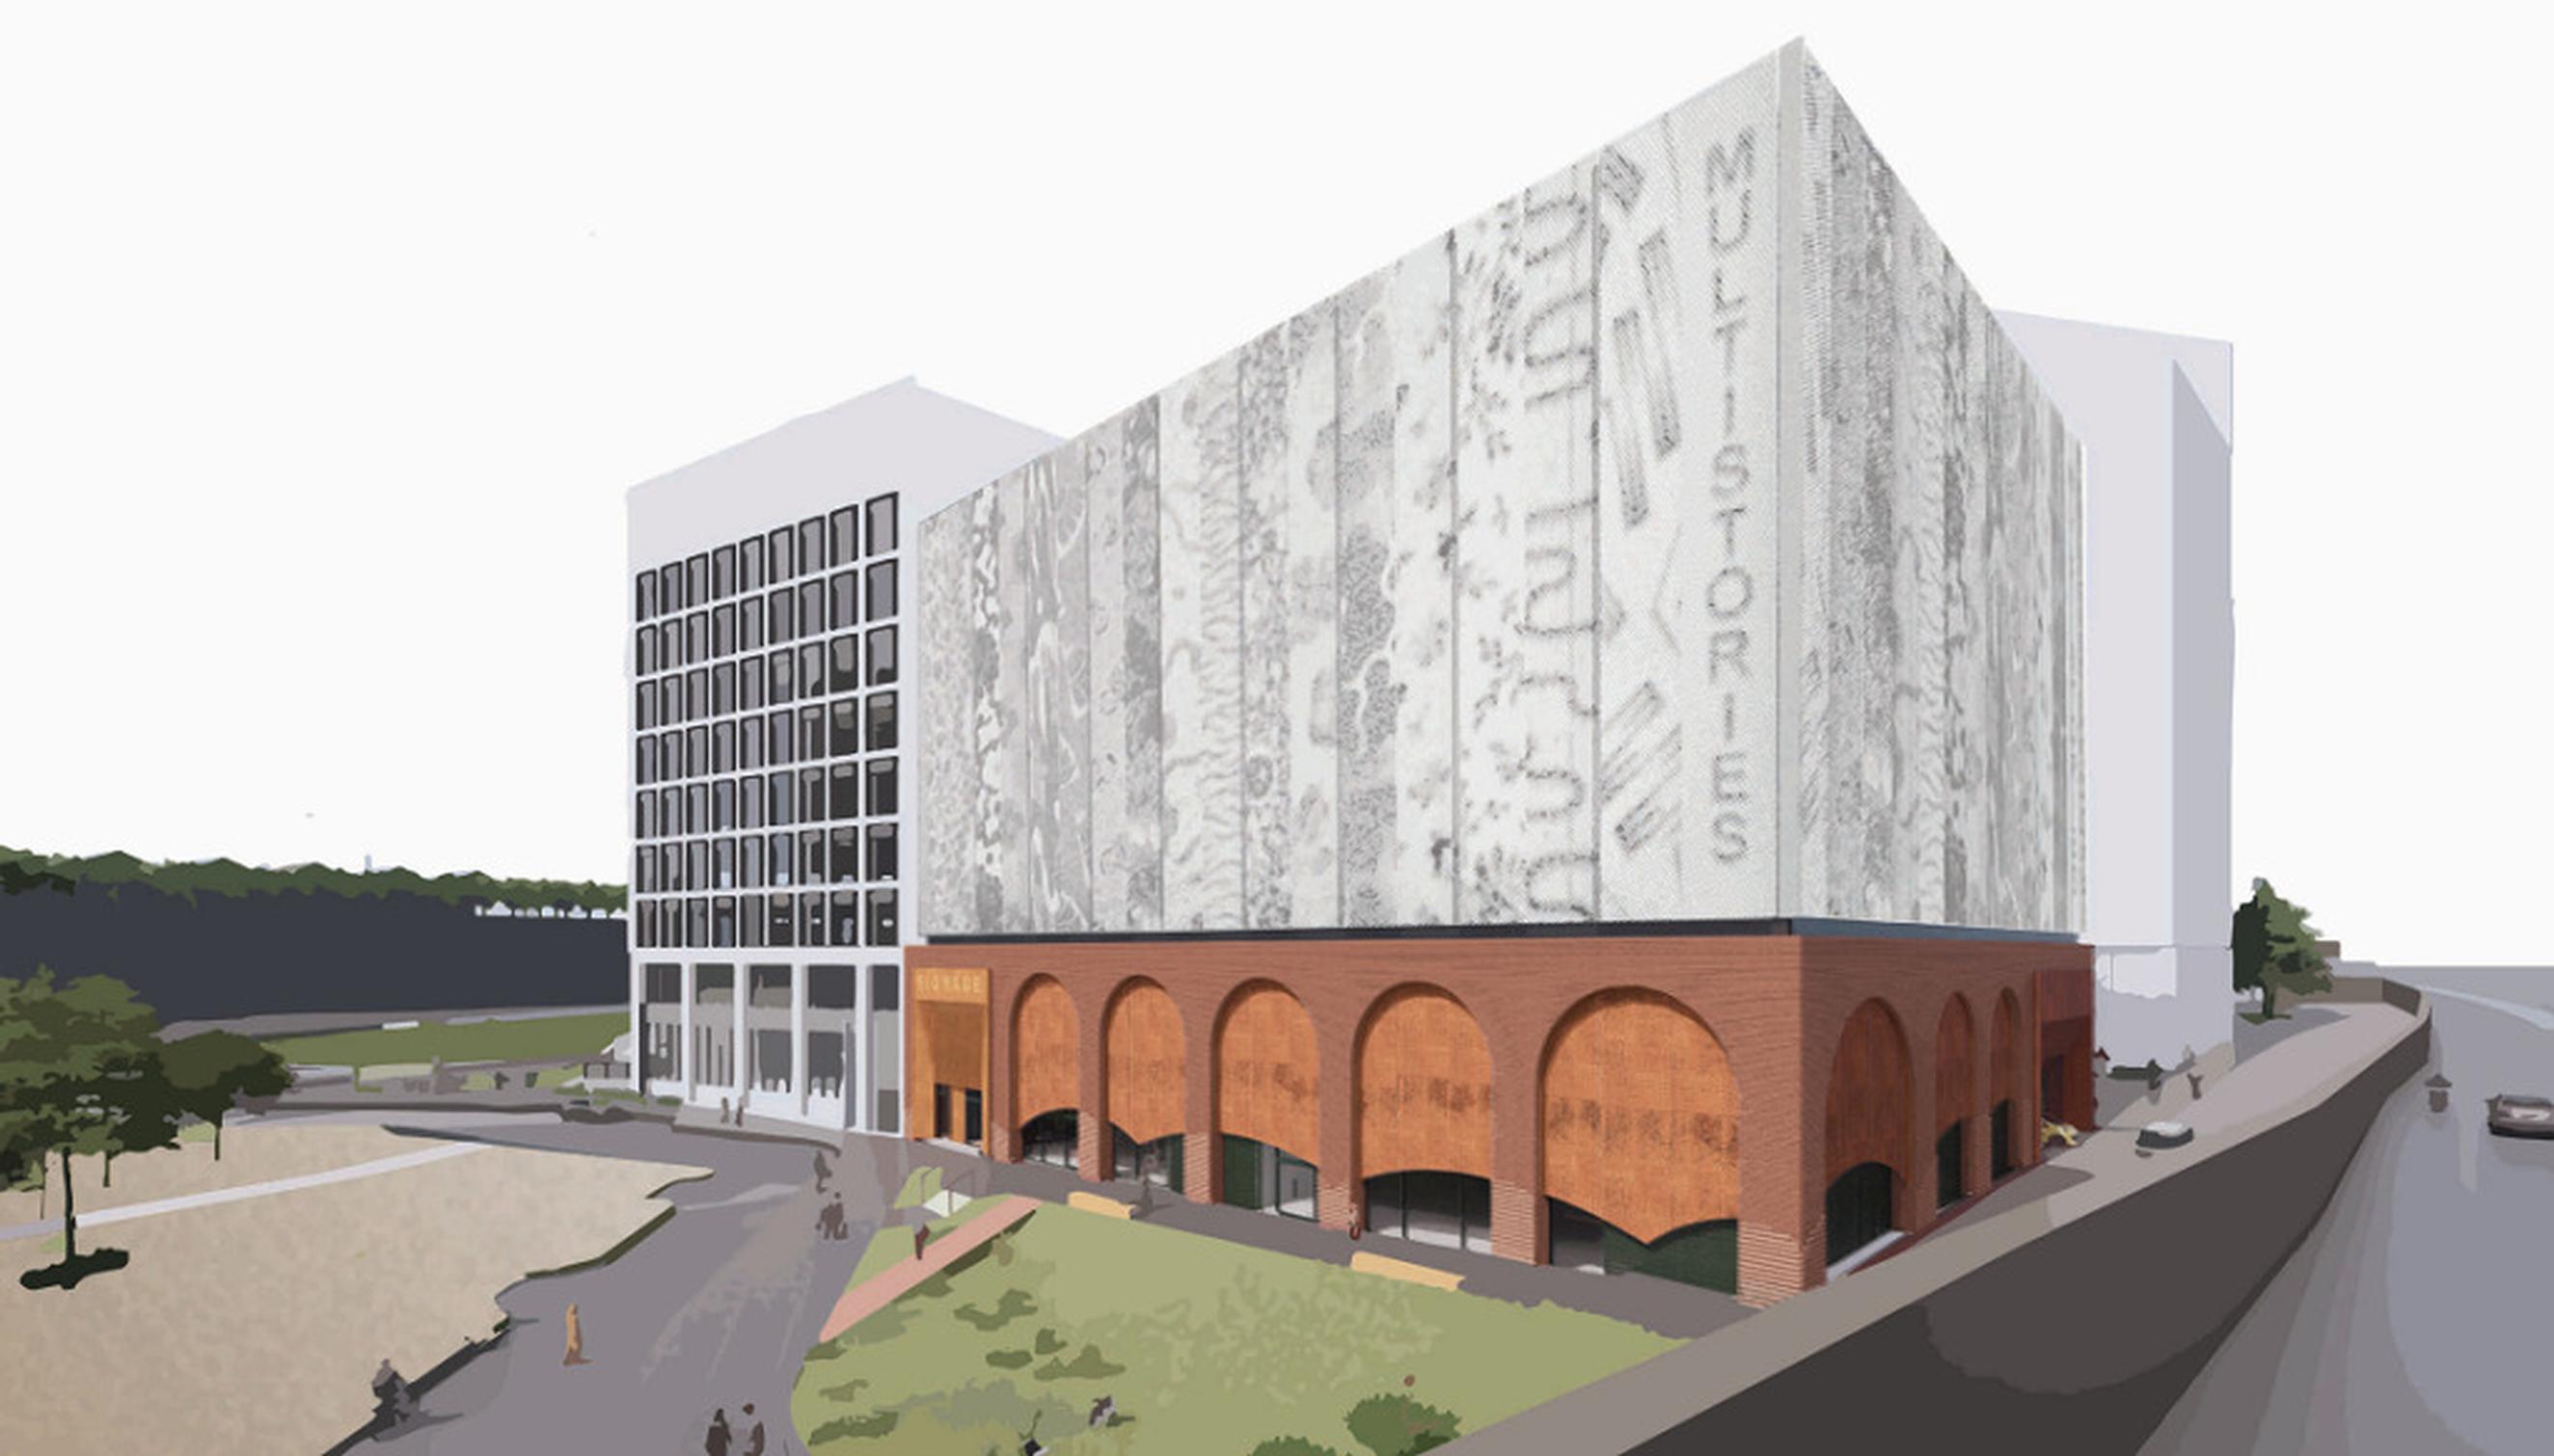 Revised façade design for the Mayfield car park